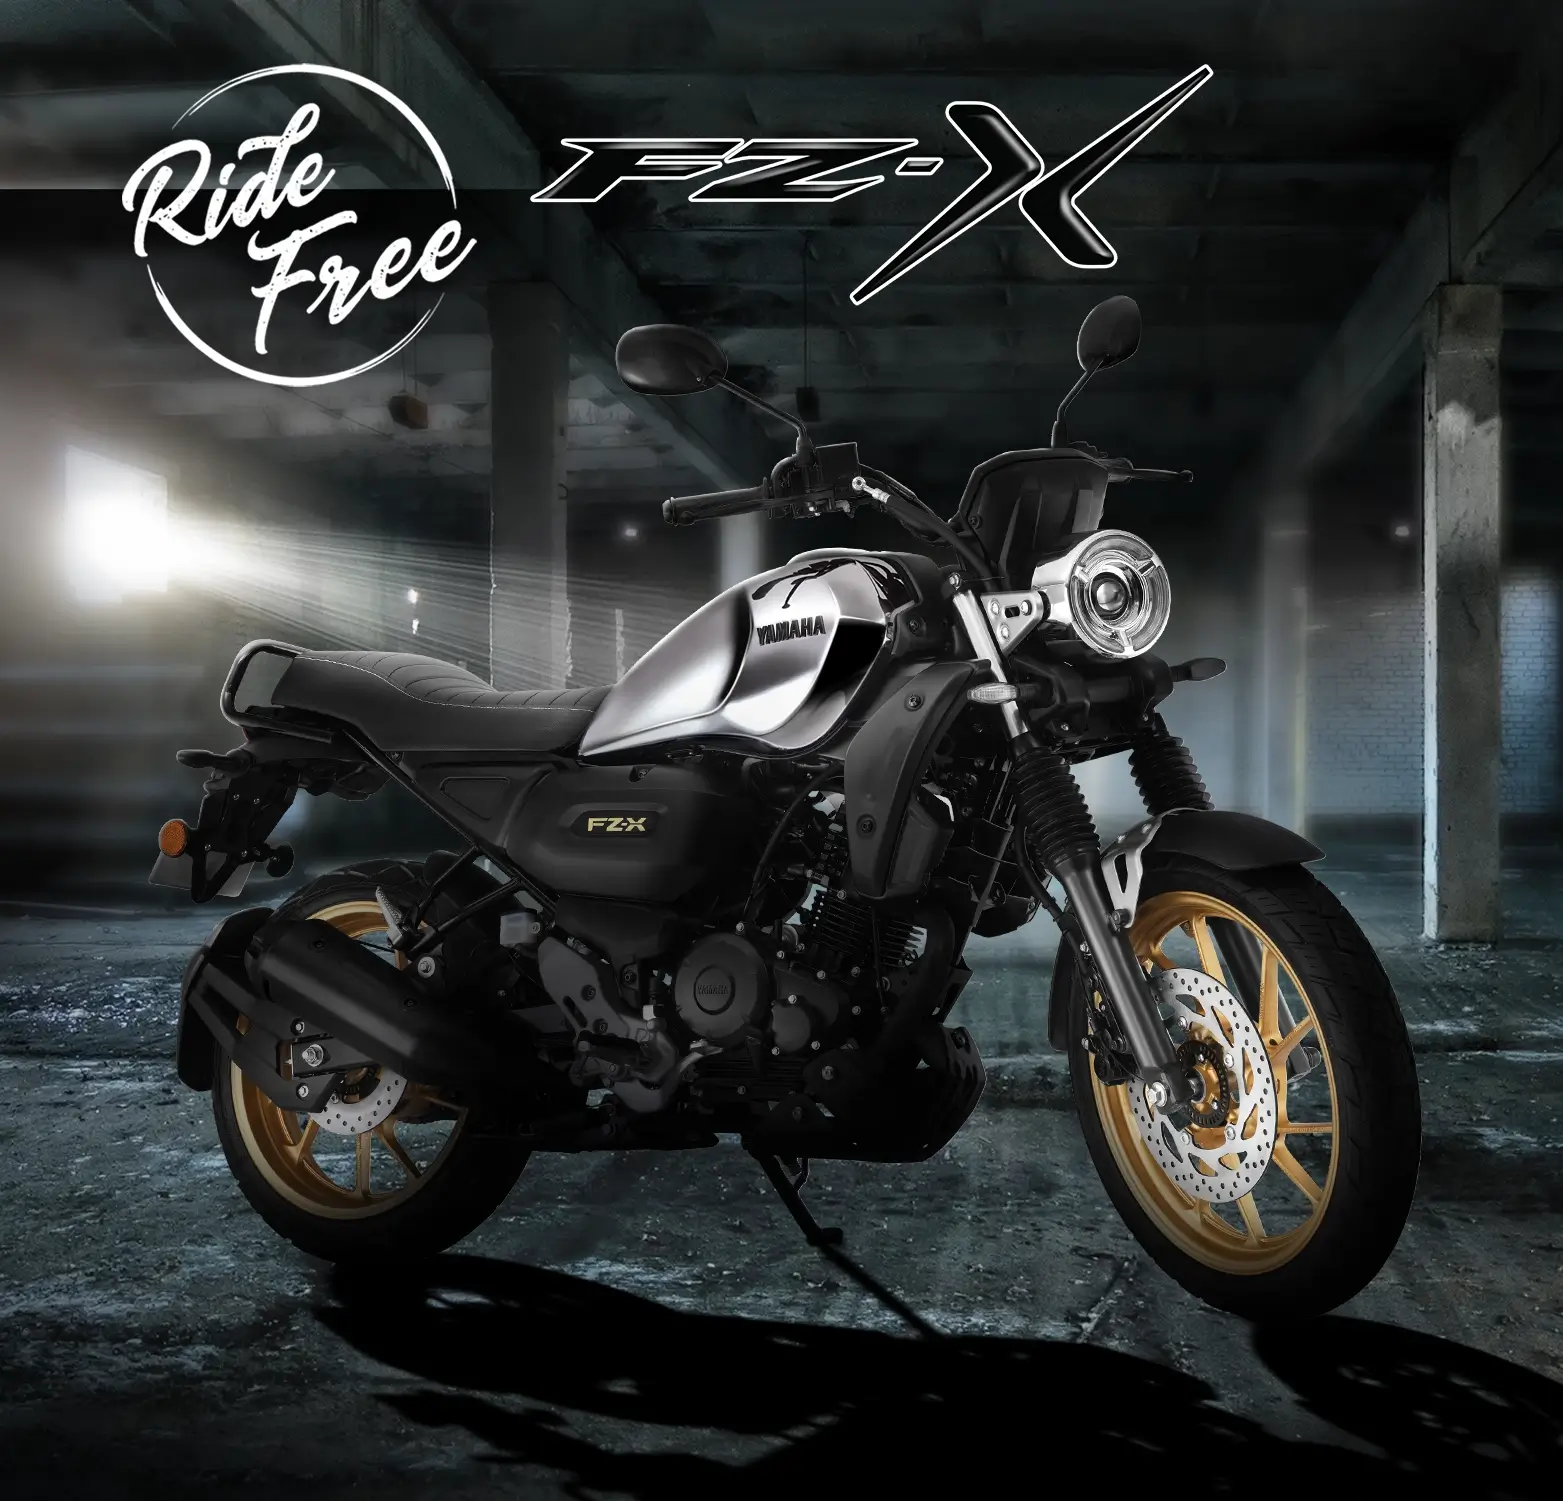 Yamaha Aerox 155 first ride review